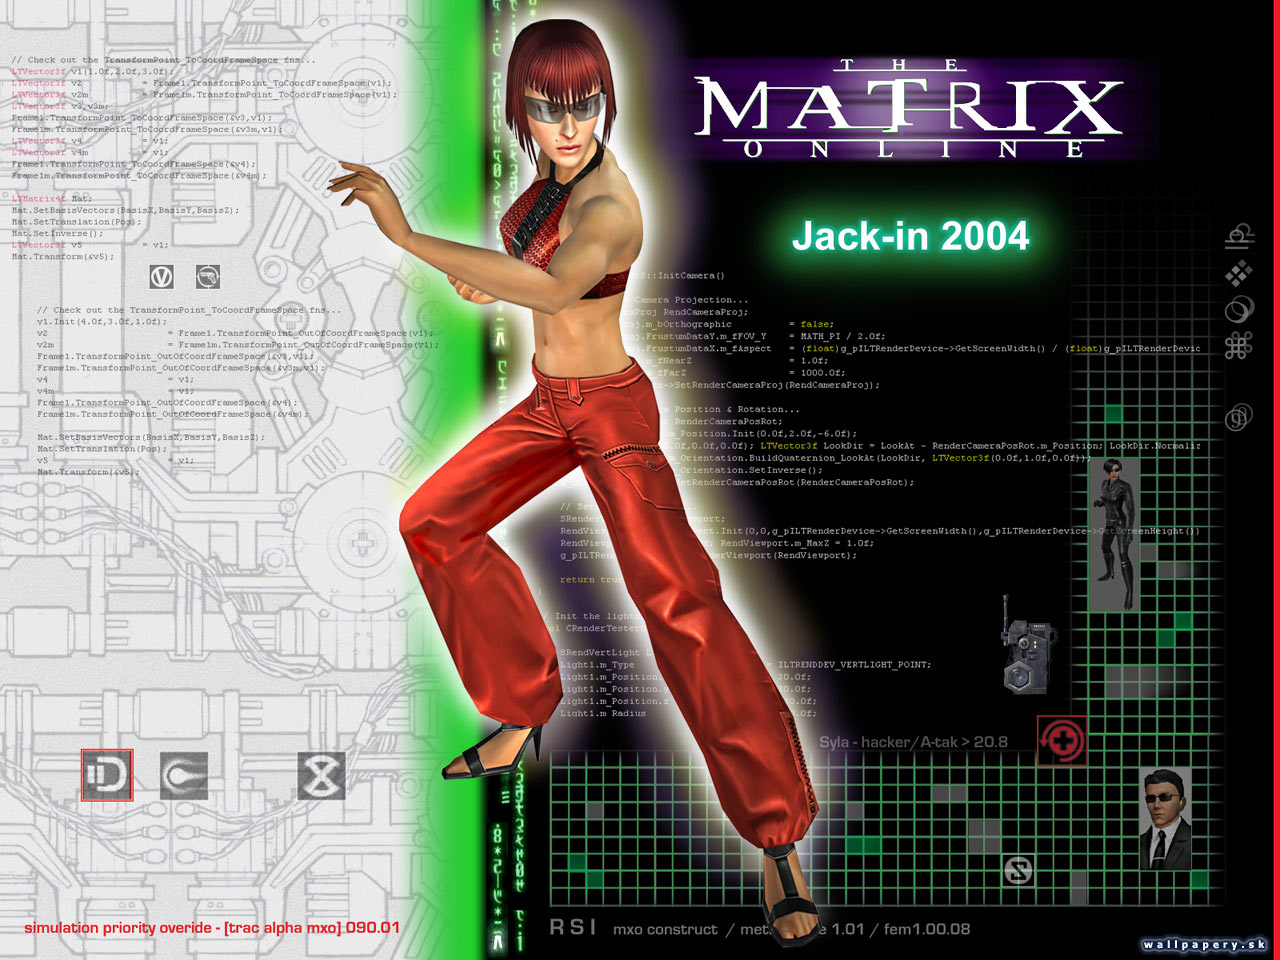 The Matrix Online - wallpaper 5